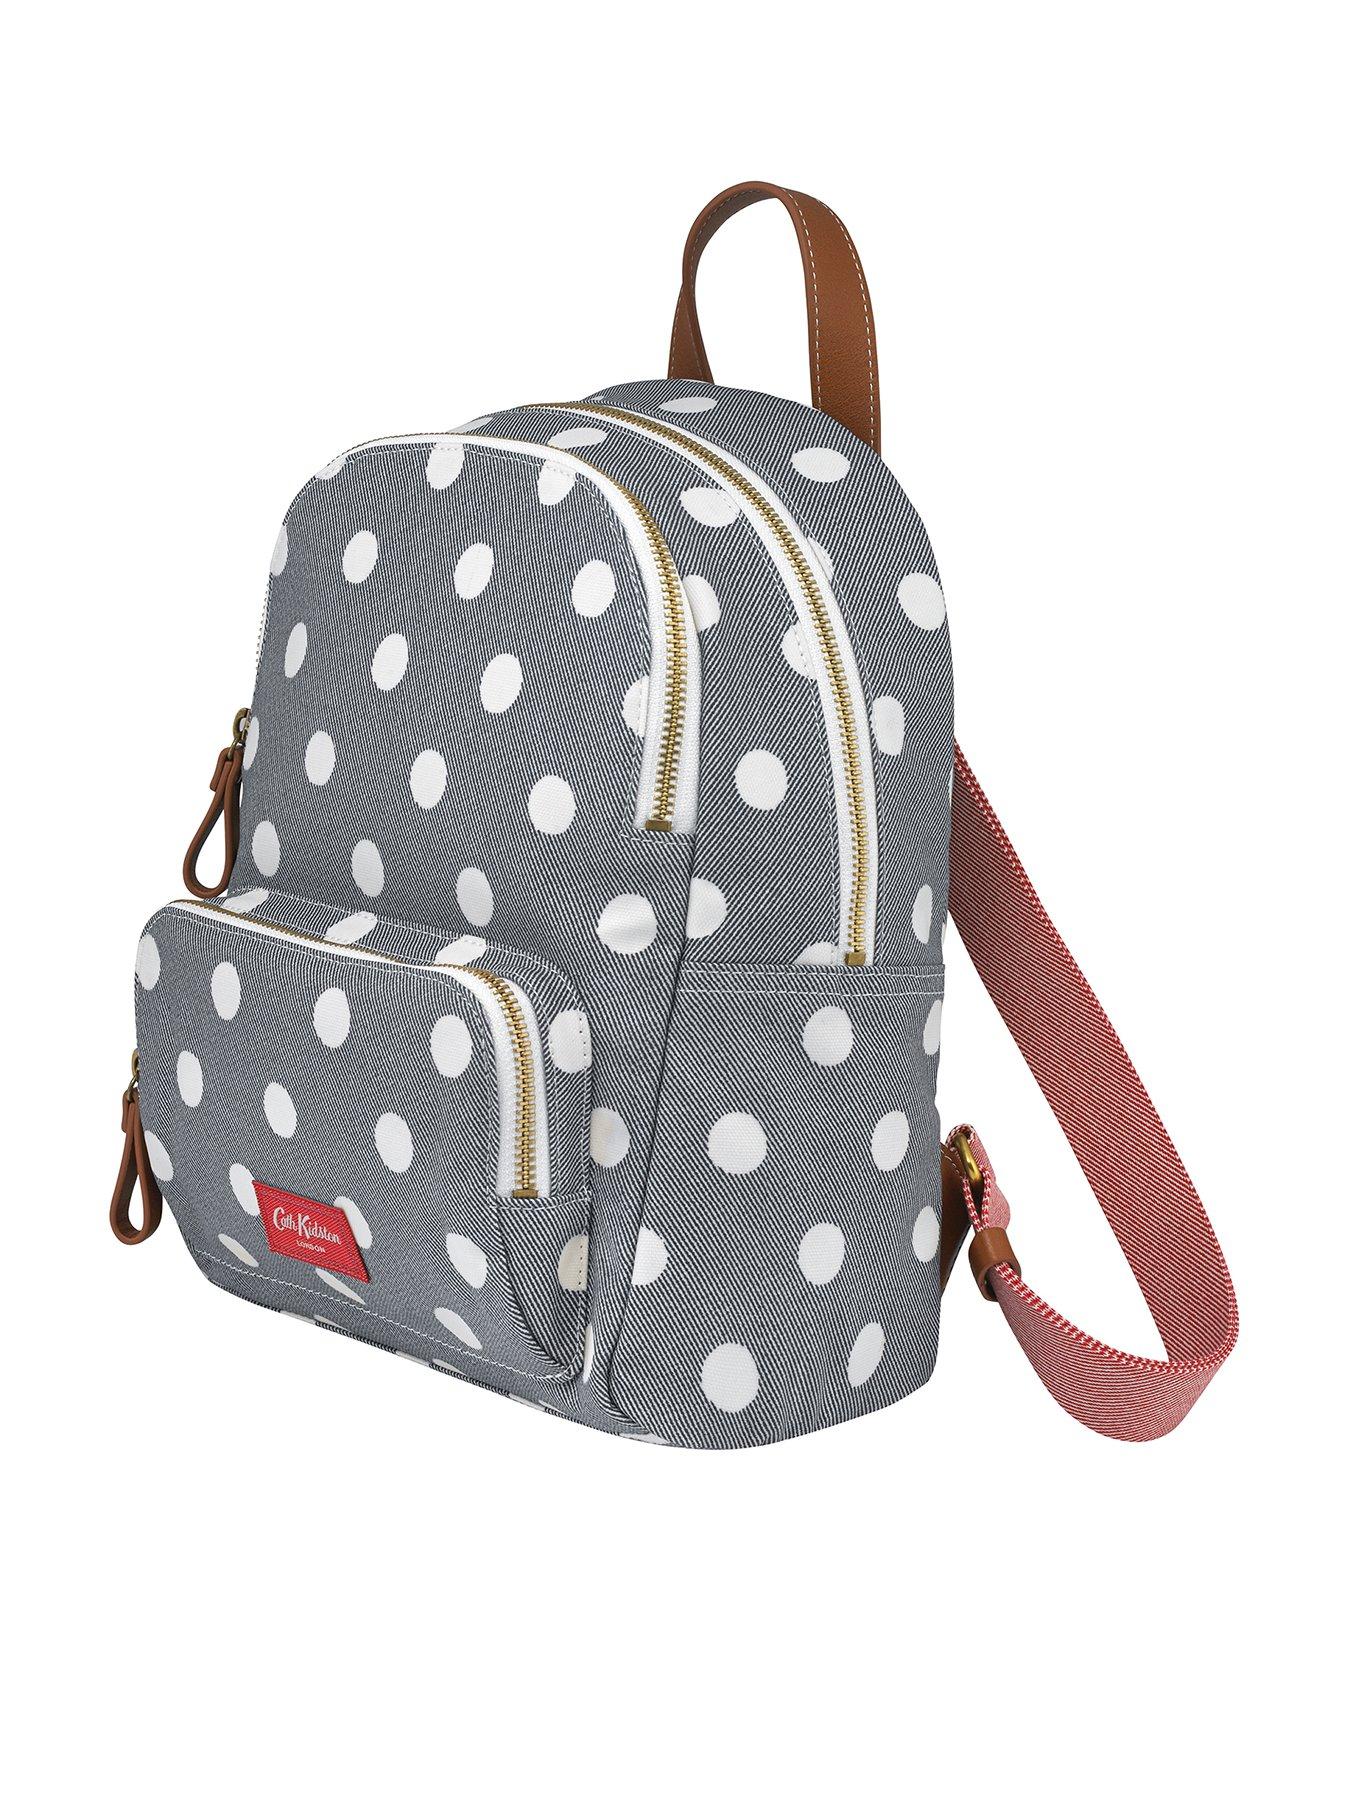 cath kidston button spot multi pocket backpack